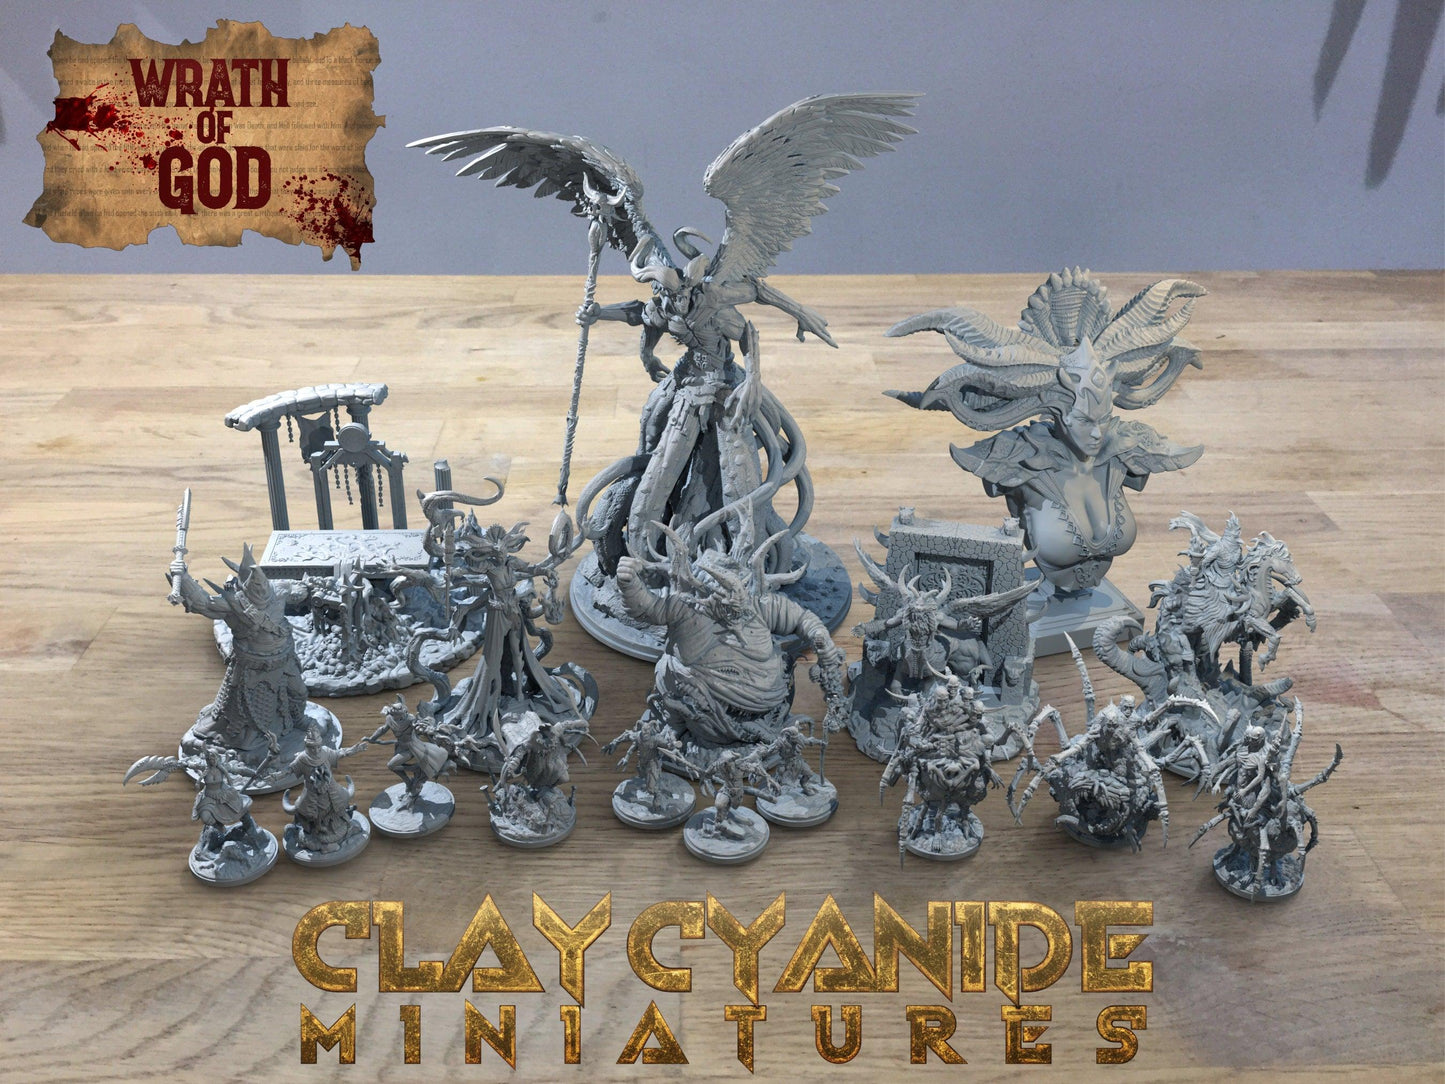 Plague Graveyard Miniature | Clay Cyanide | Wrath of God | Tabletop Gaming | DnD Miniature | Dungeons and Dragons,, DnD terrain - Plague Miniatures shop for DnD Miniatures